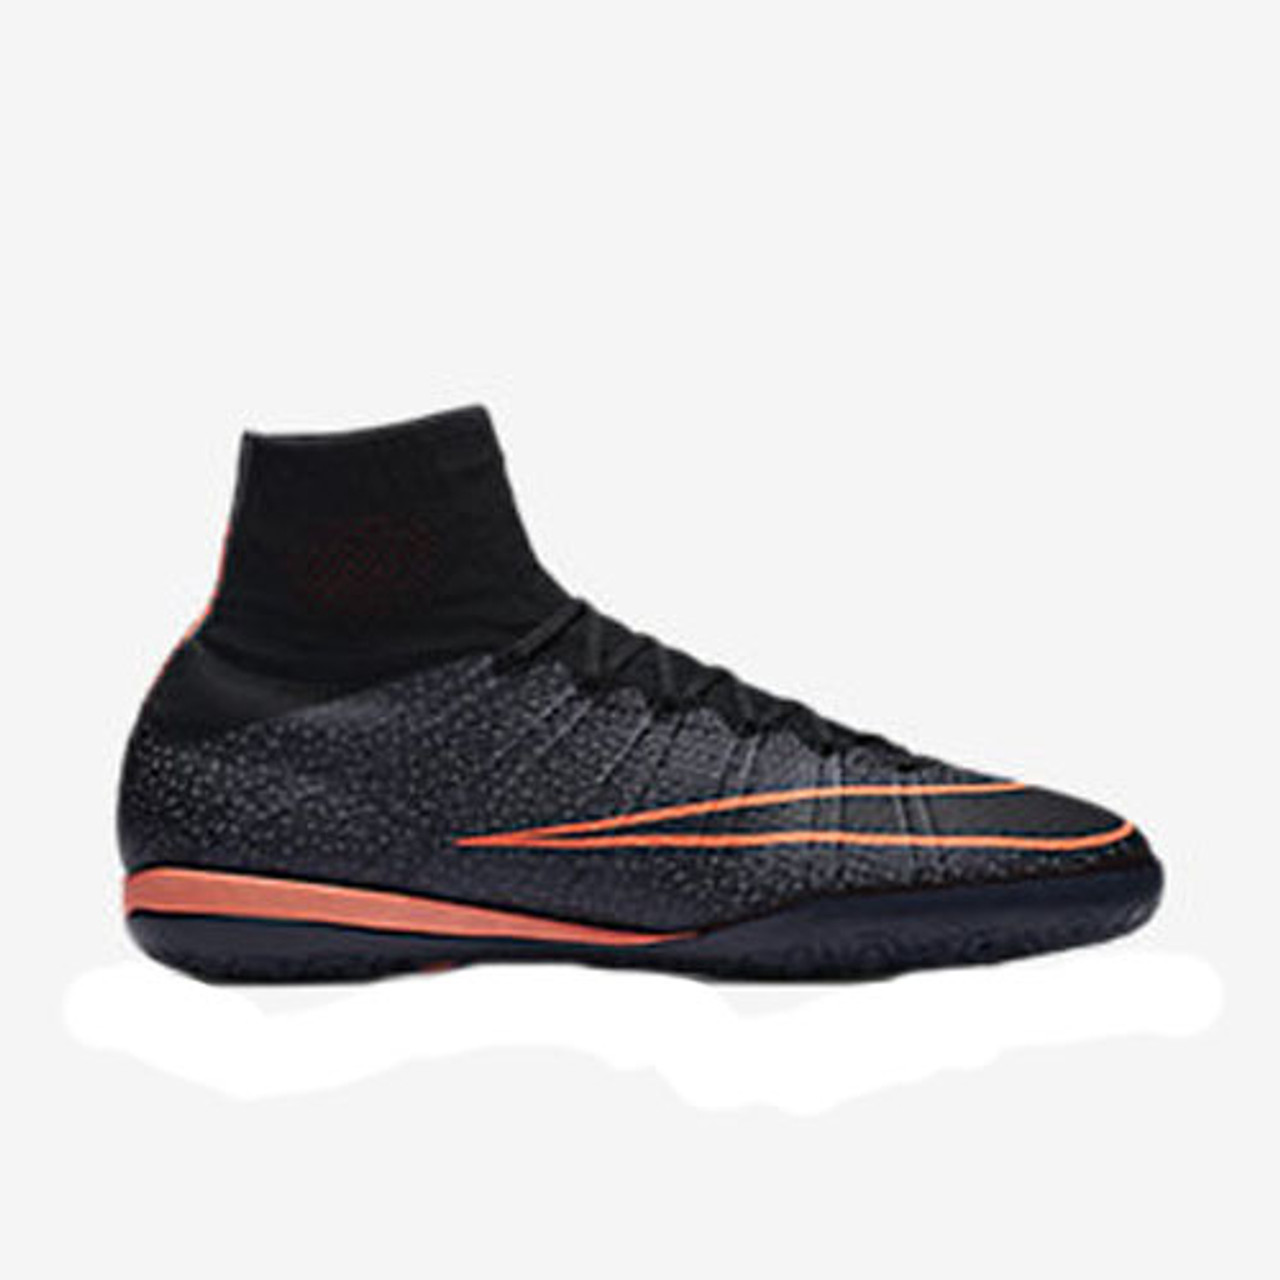 NIKE PROXIMO IC BLACK/BRIGHT MANGO indoor soccer shoes